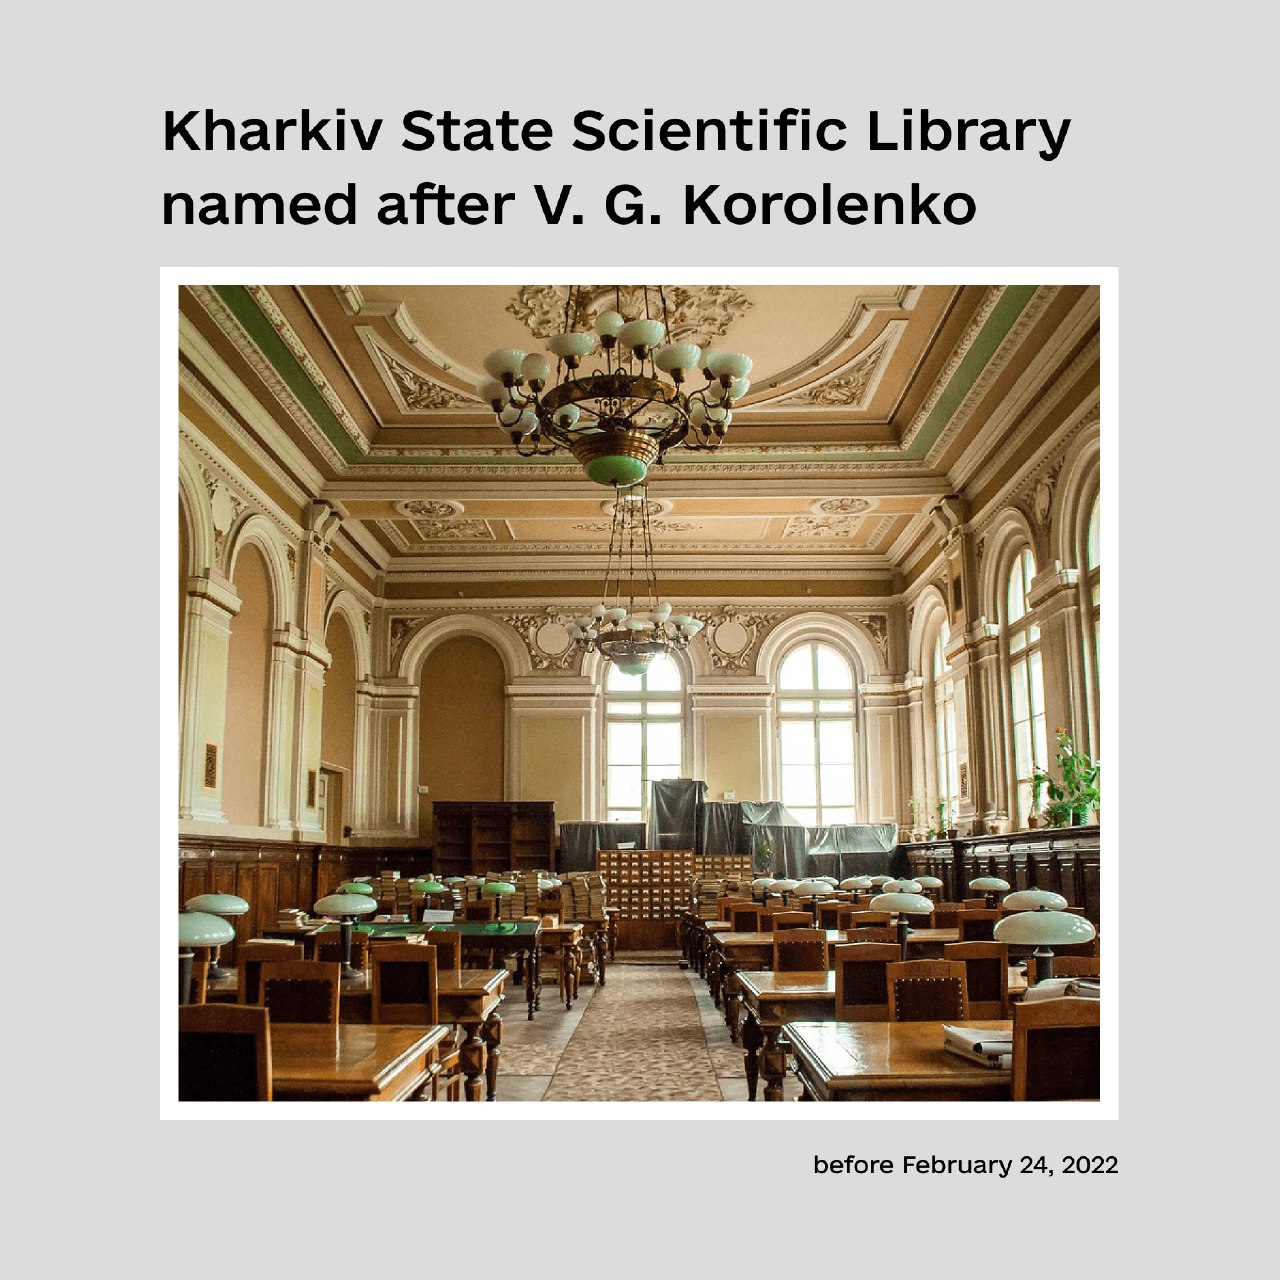 Kharkiv State Scientific Library named after Korolenko